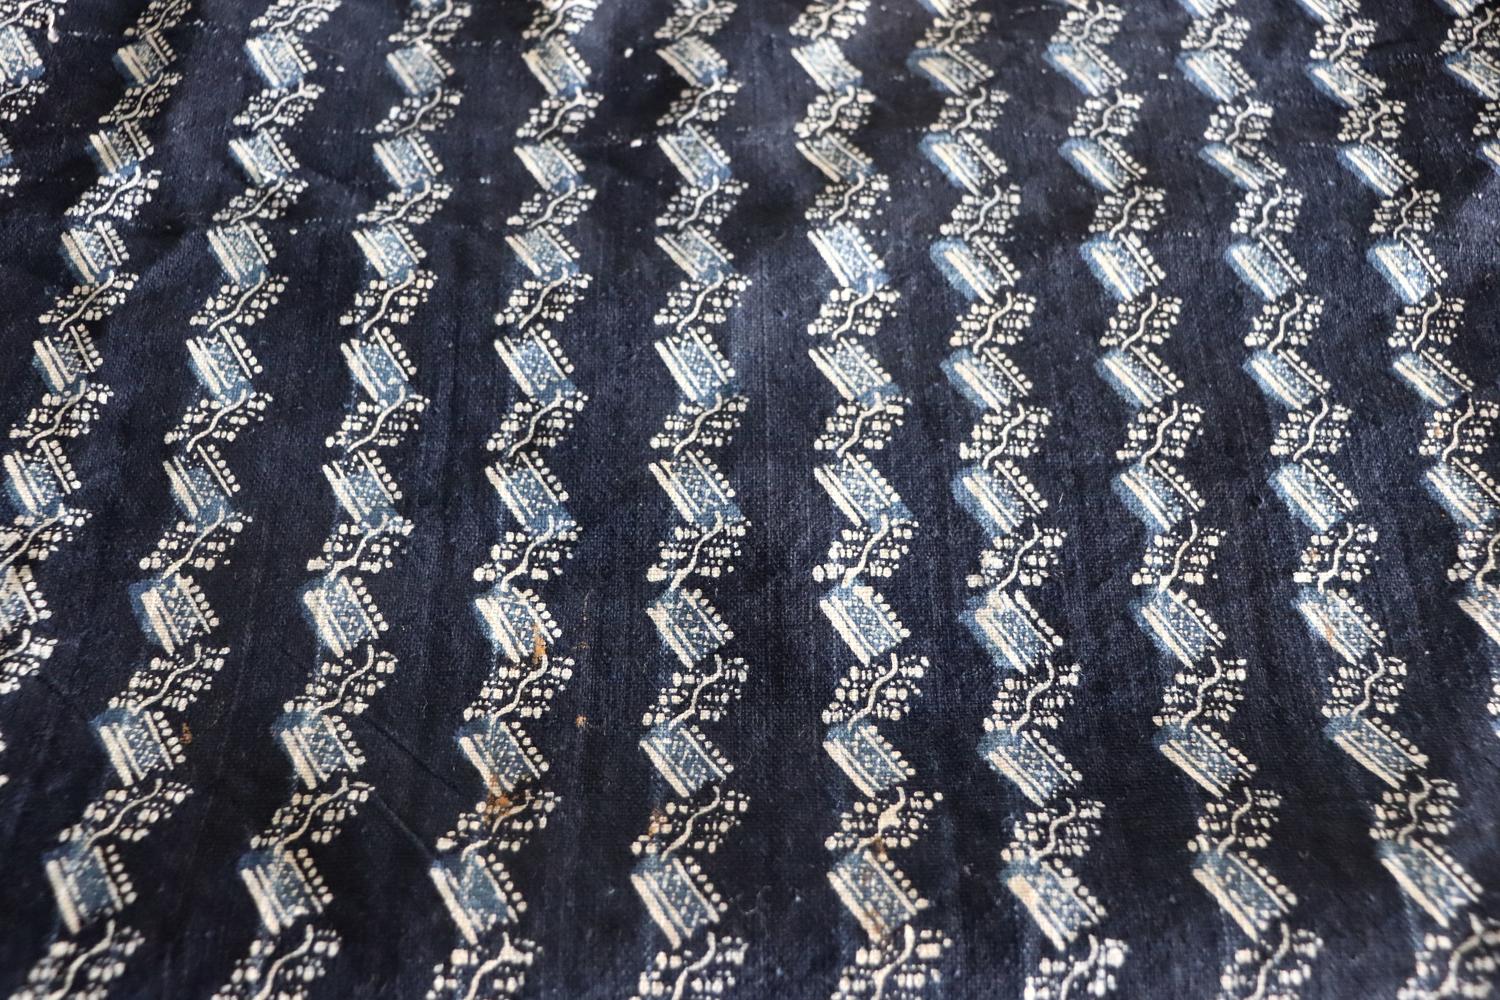 Indigo lengths of hand printed Chinese fabric